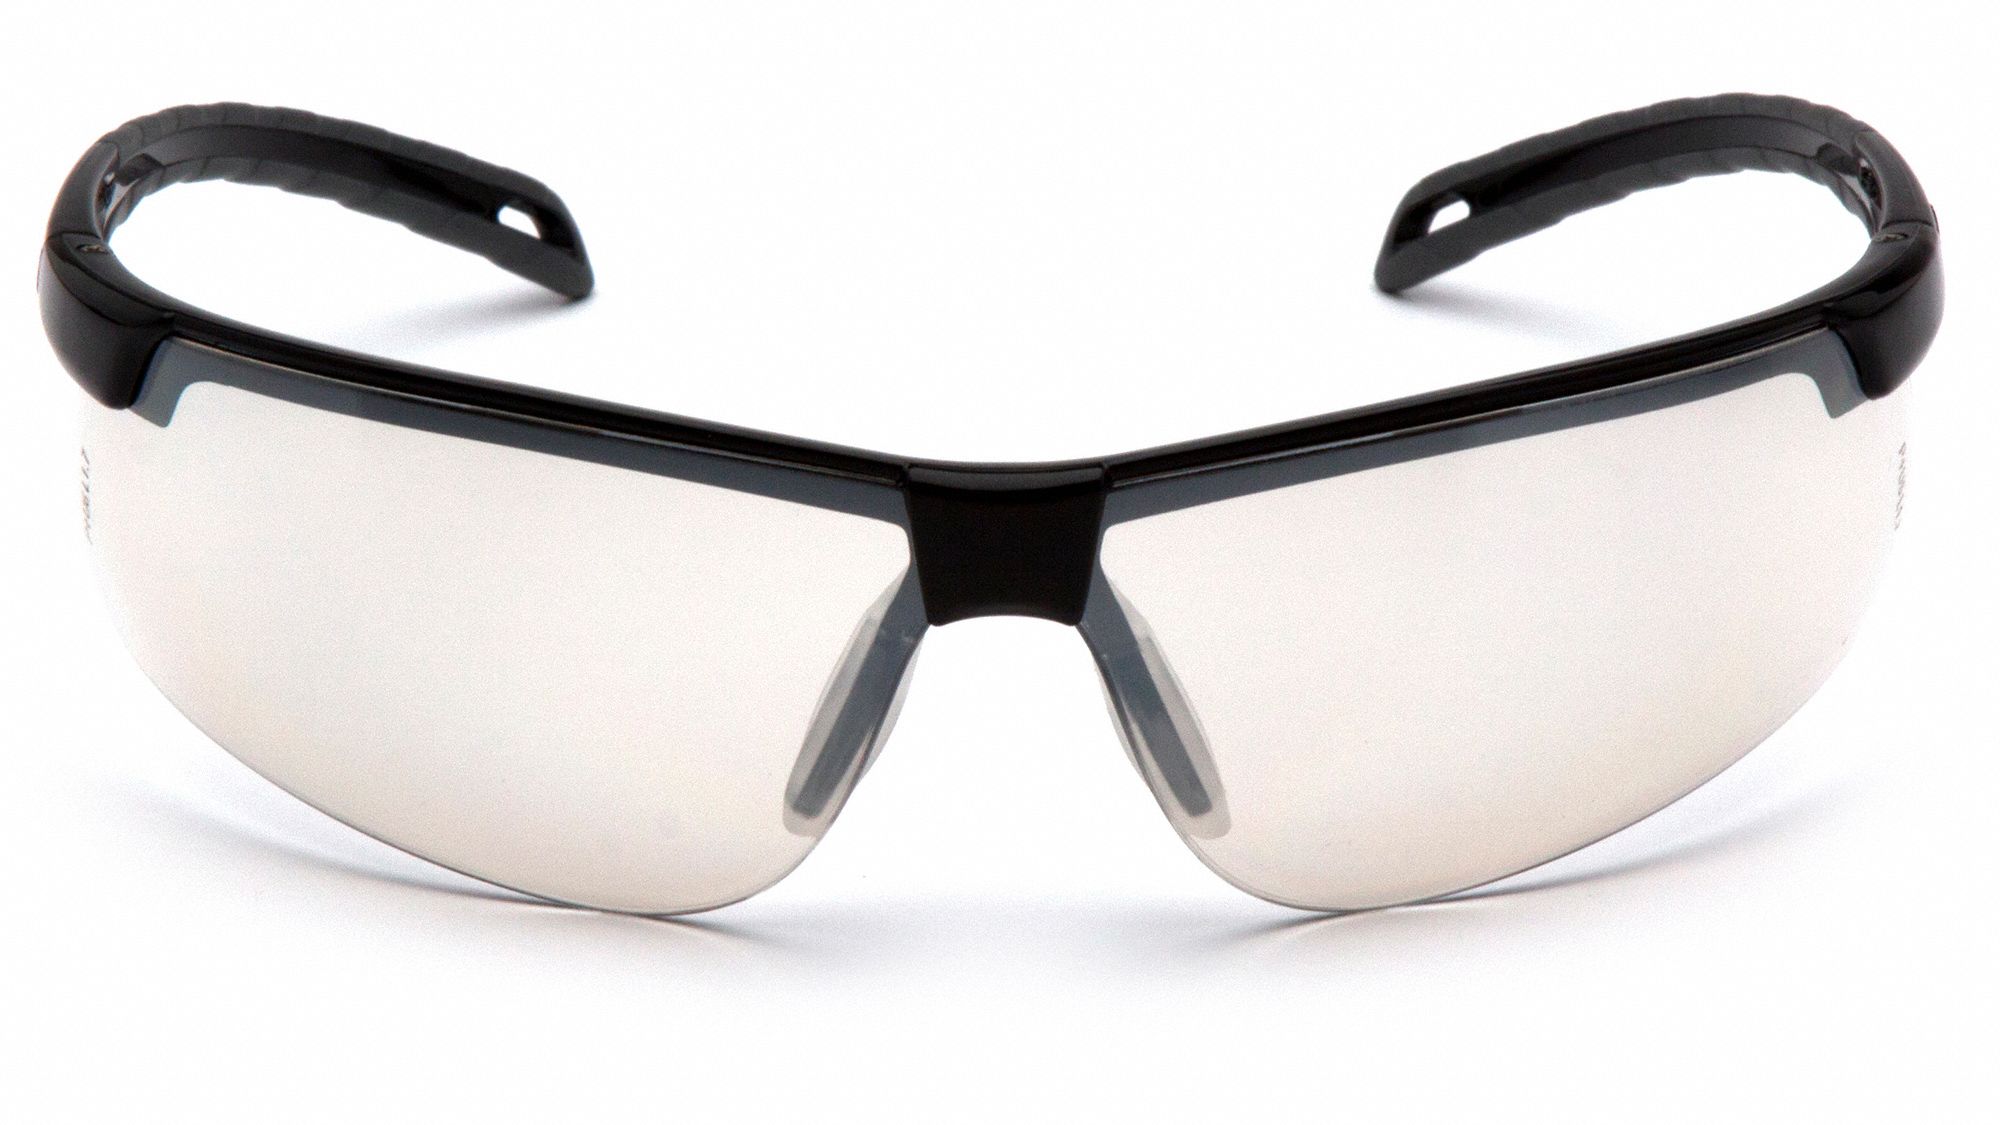 Pyramex Safety Glasses Anti Fog Anti Static Anti Scratch No Foam Lining Wraparound Frame